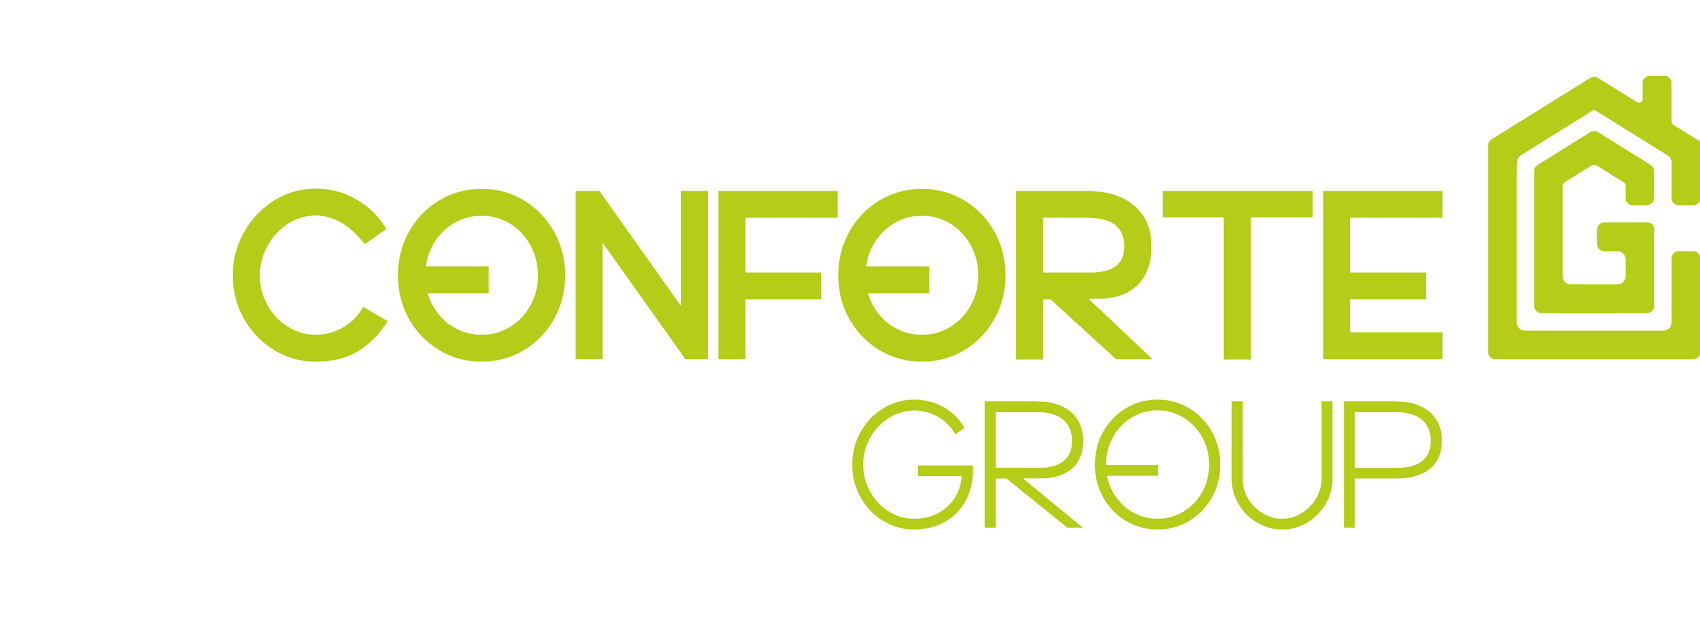 Conforte Group GmbH 